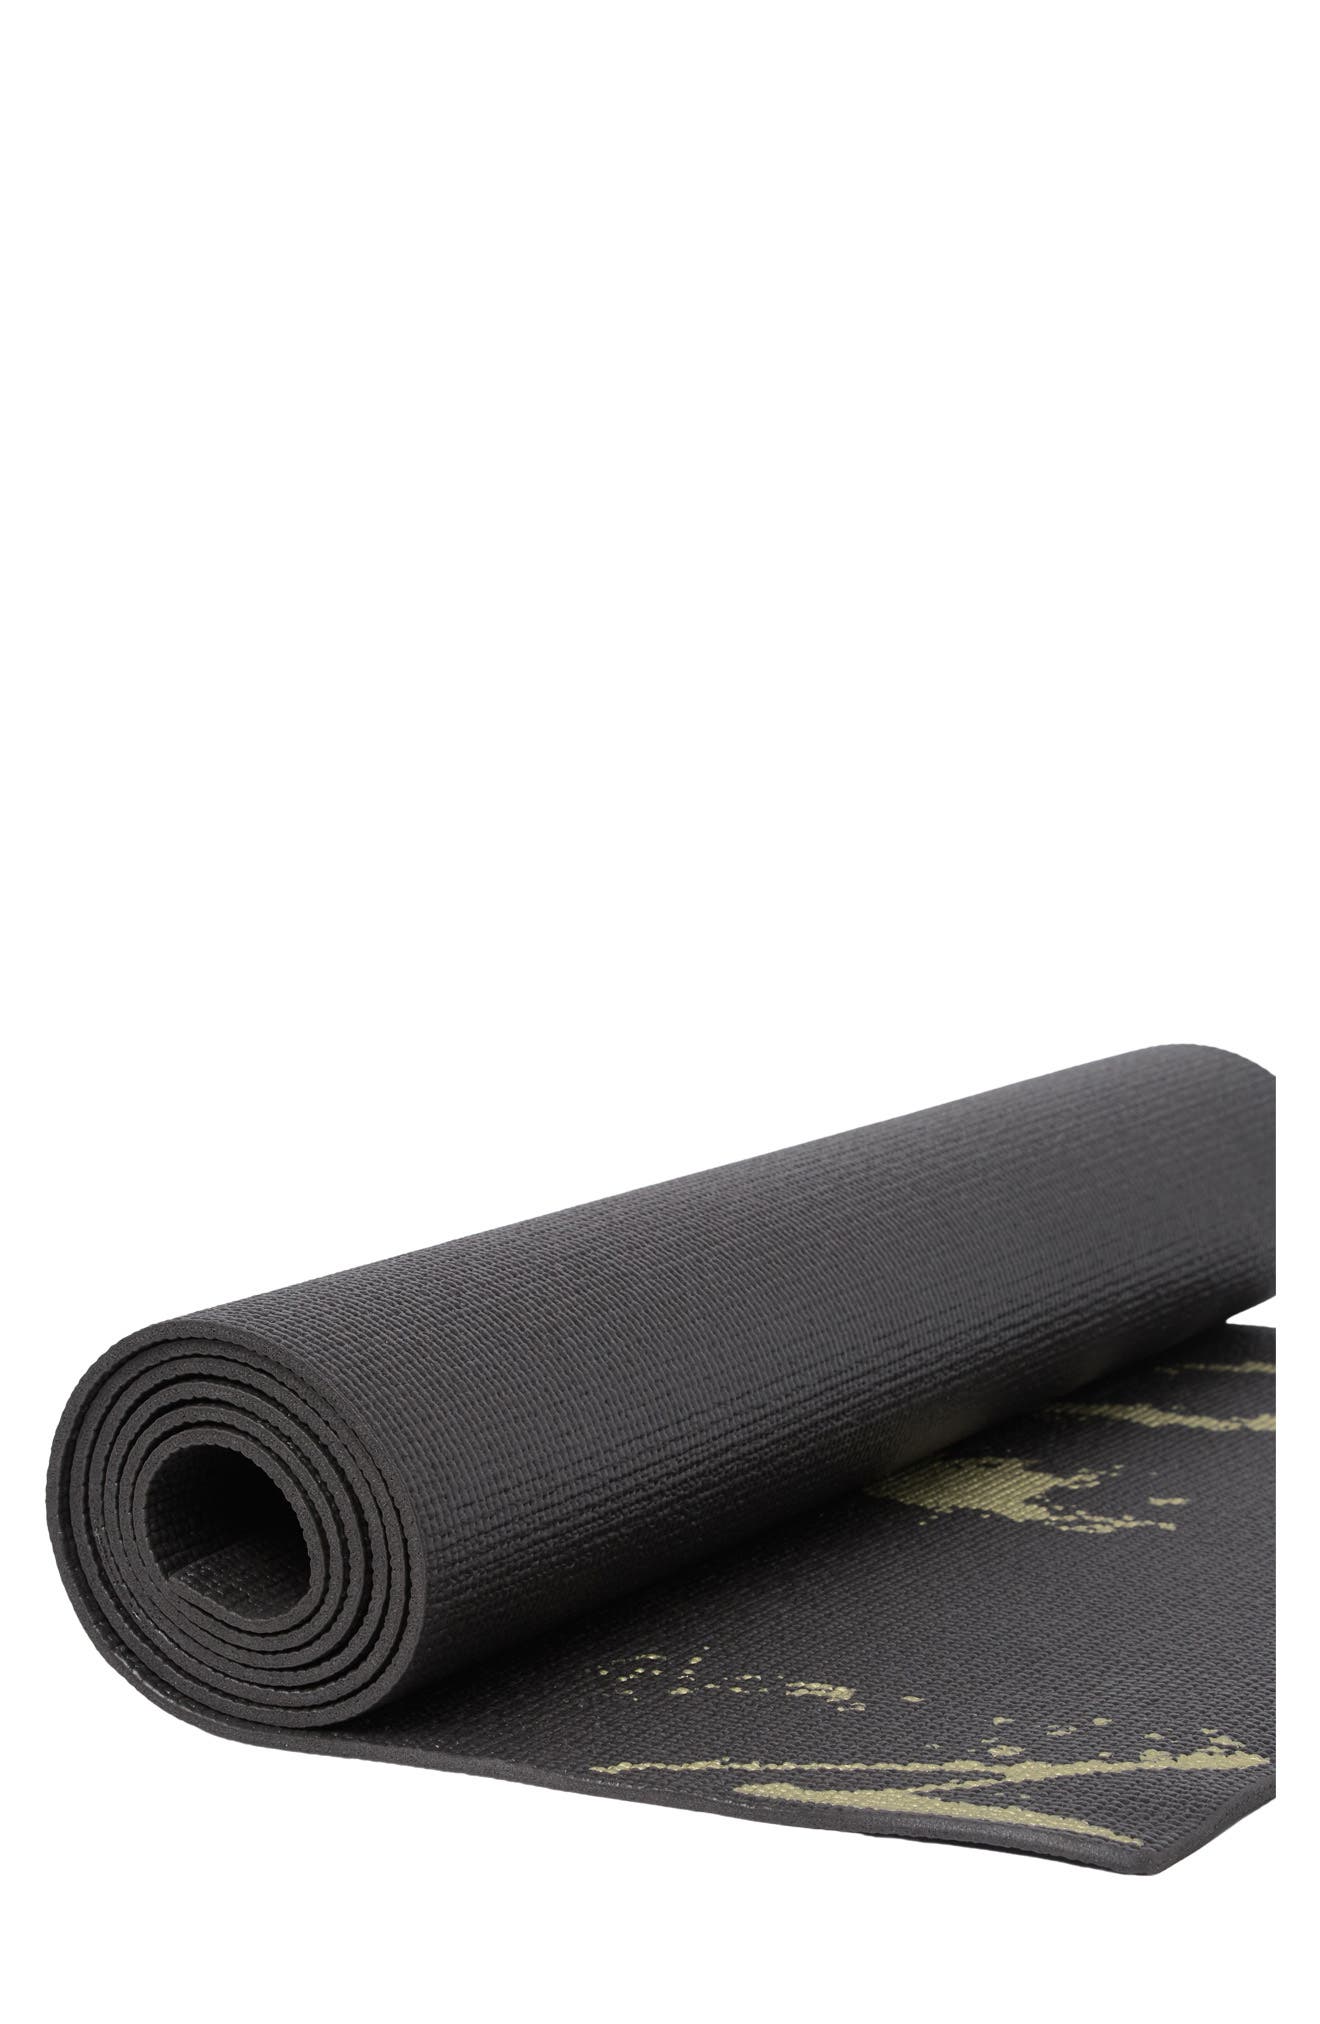 Oci 5mm Metallic Foil Yoga Mat In Gold